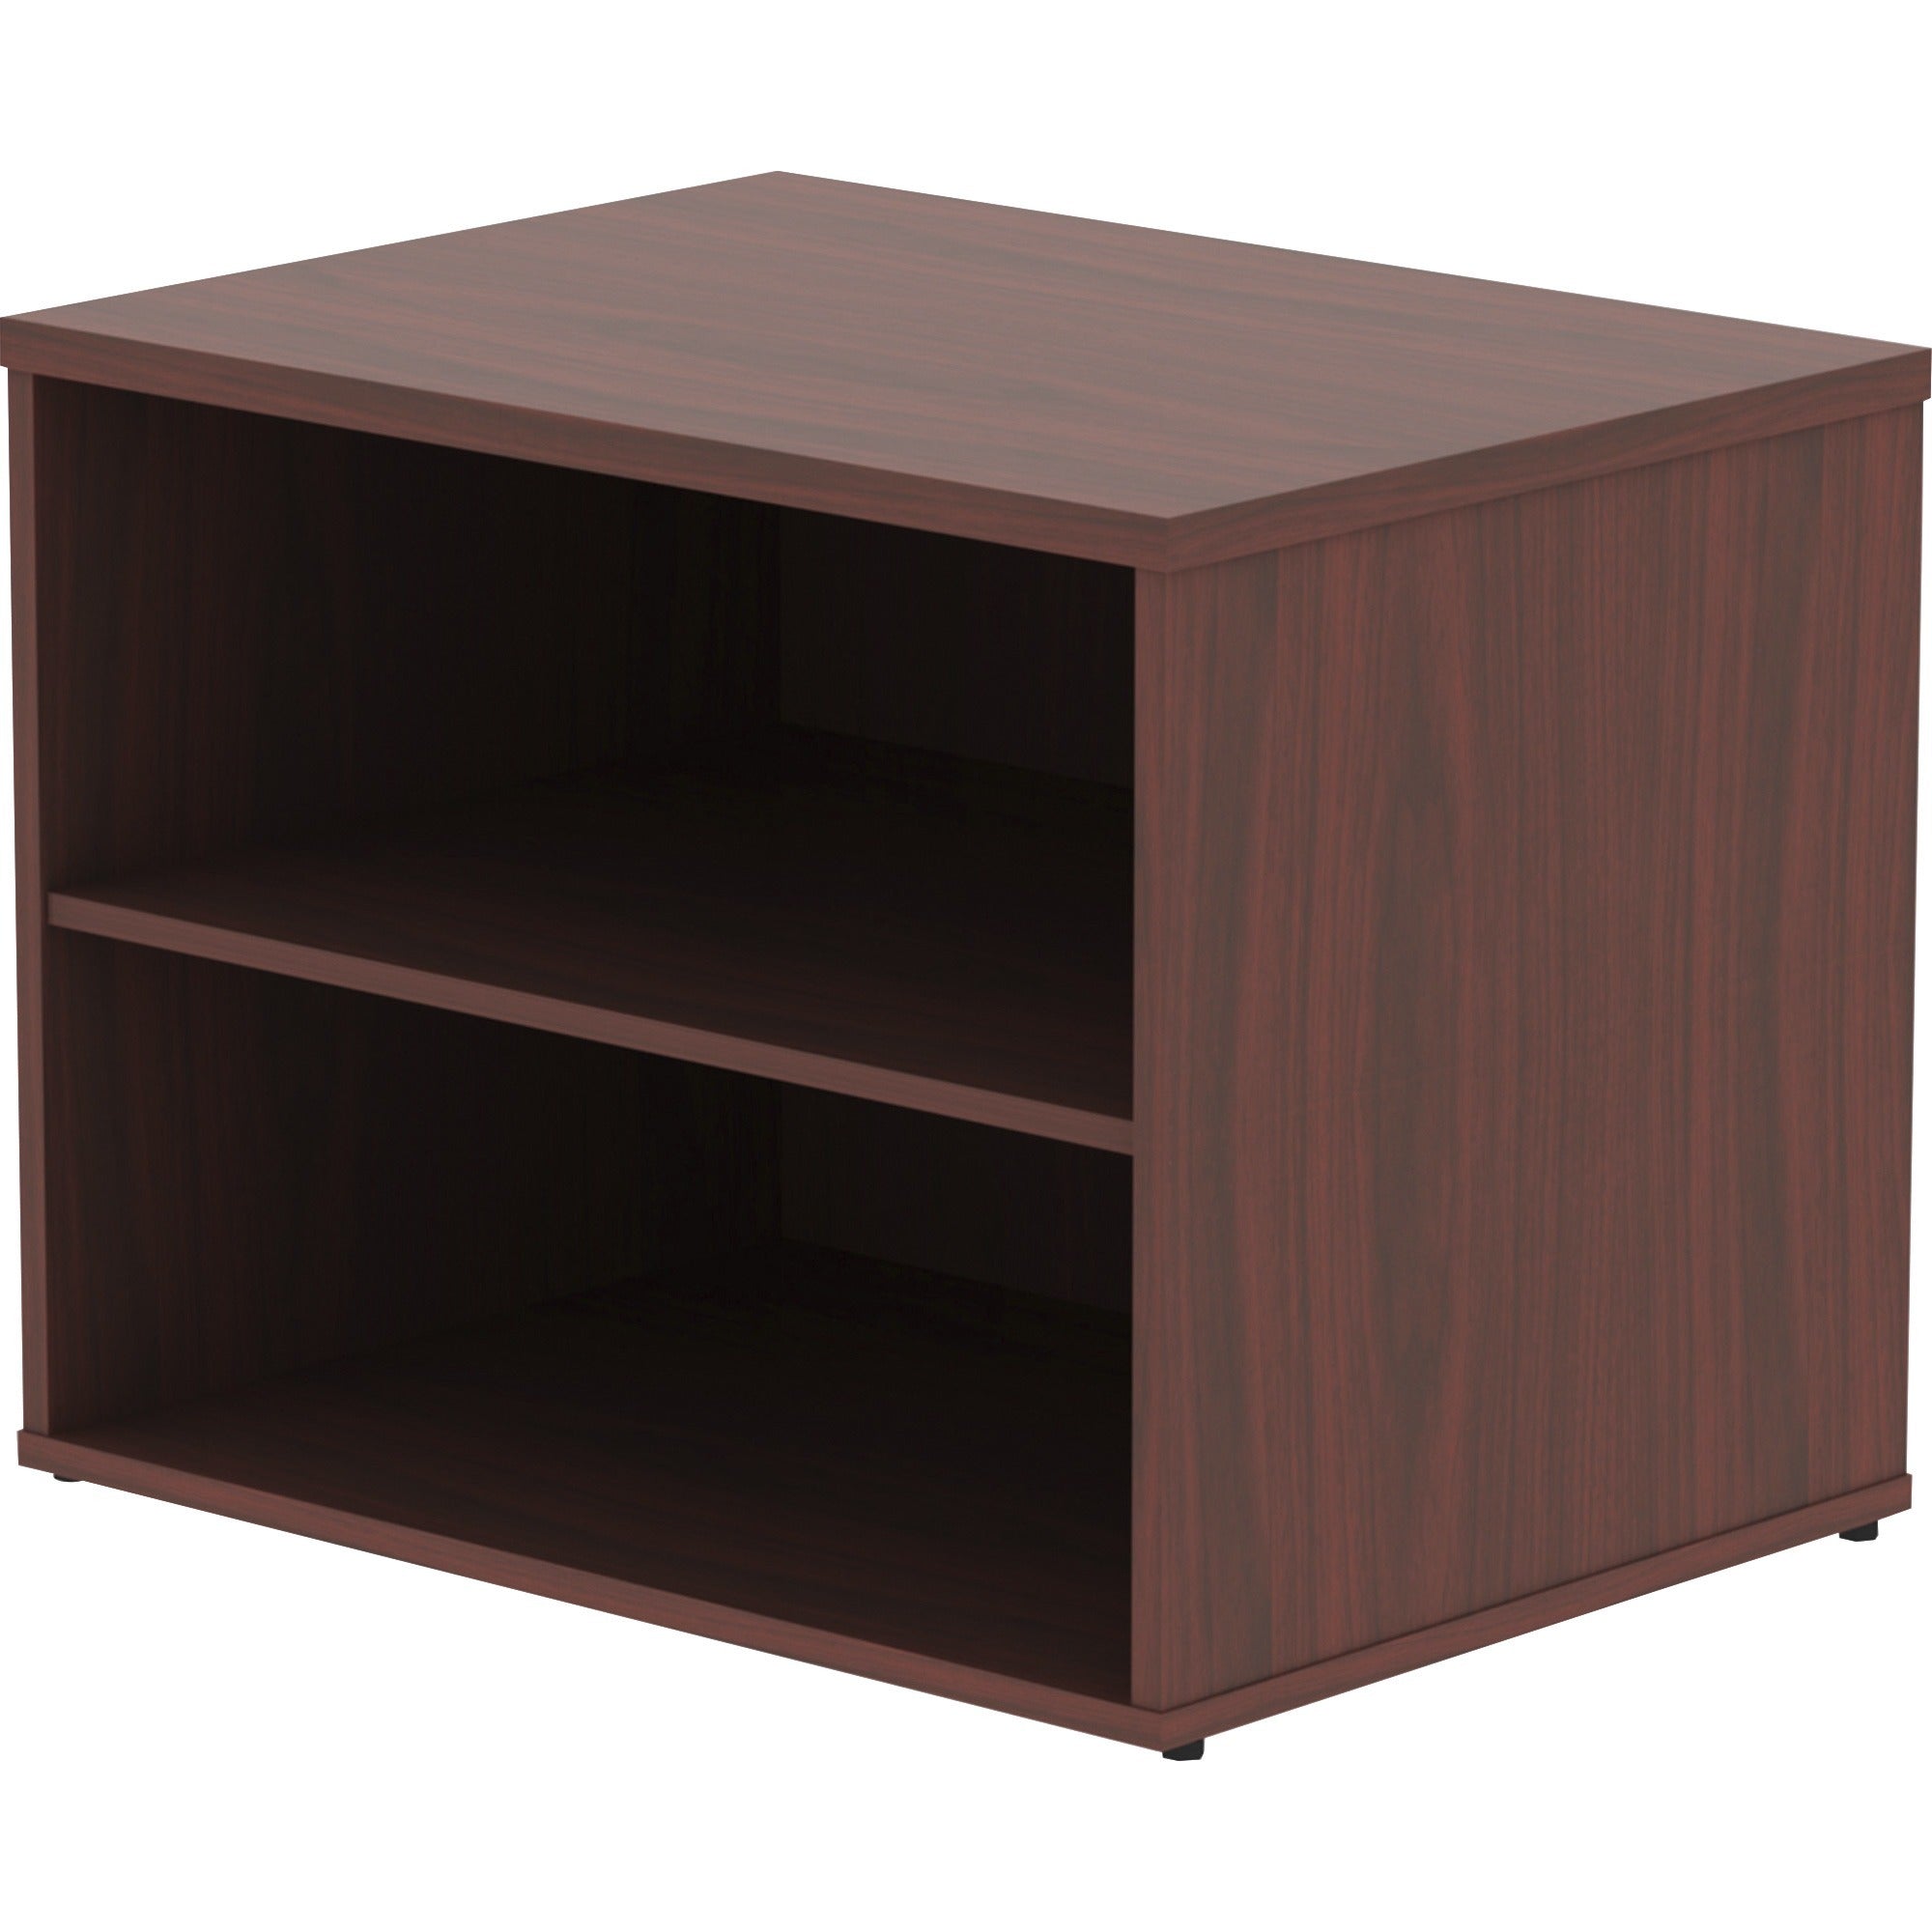 Lorell Relevance Series Storage Cabinet Credenza w/No Doors - 29.5" x 22"23.1" - 2 Shelve(s) - Finish: Mahogany, Laminate - 3